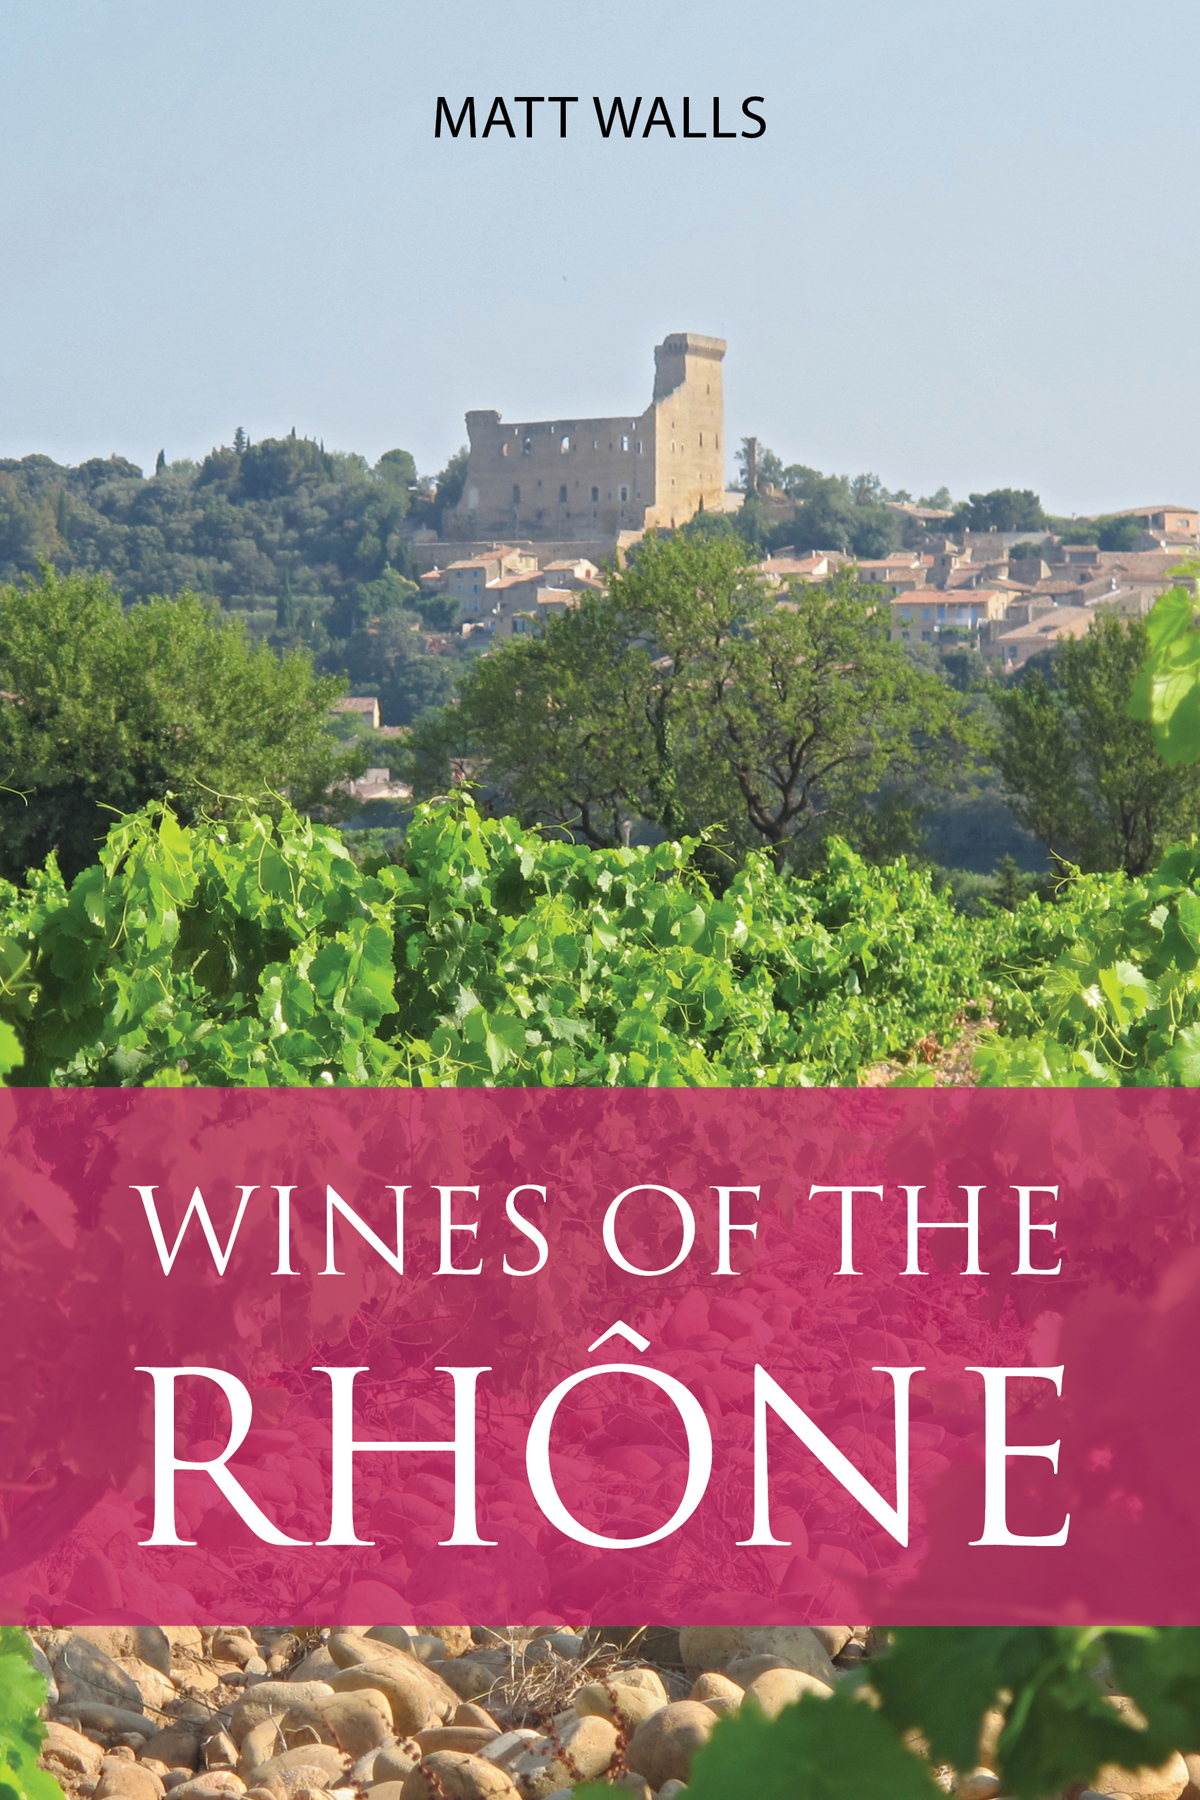 Extract: Wines of the Rhône, by Matt Walls